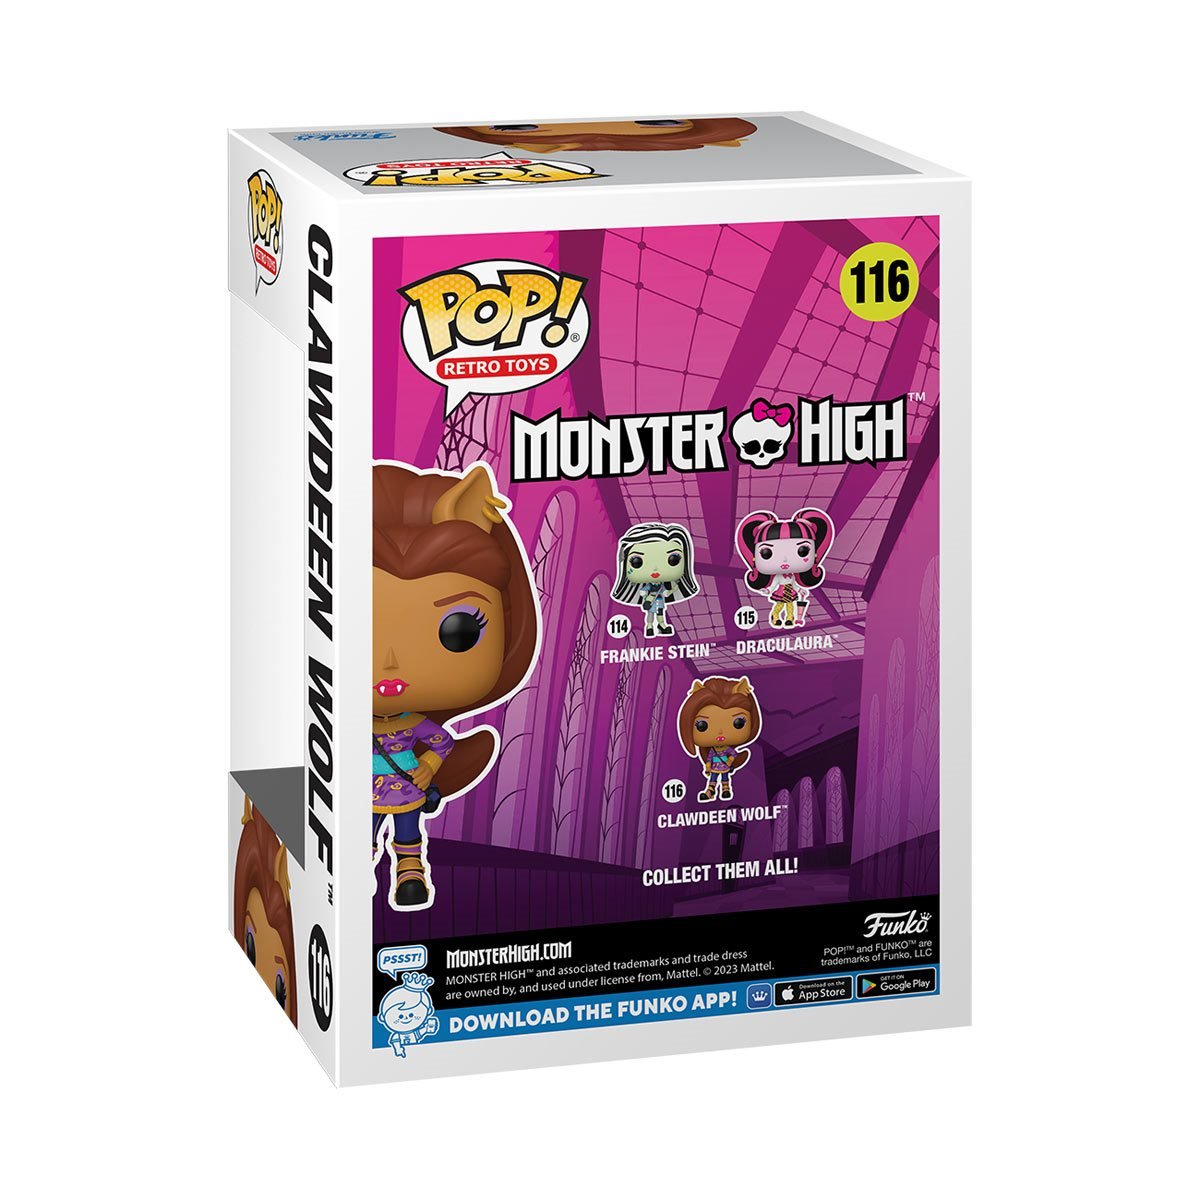 Monster Hight Funko Pop! Wave 2 - 3 pack bundle Pop-O-Loco